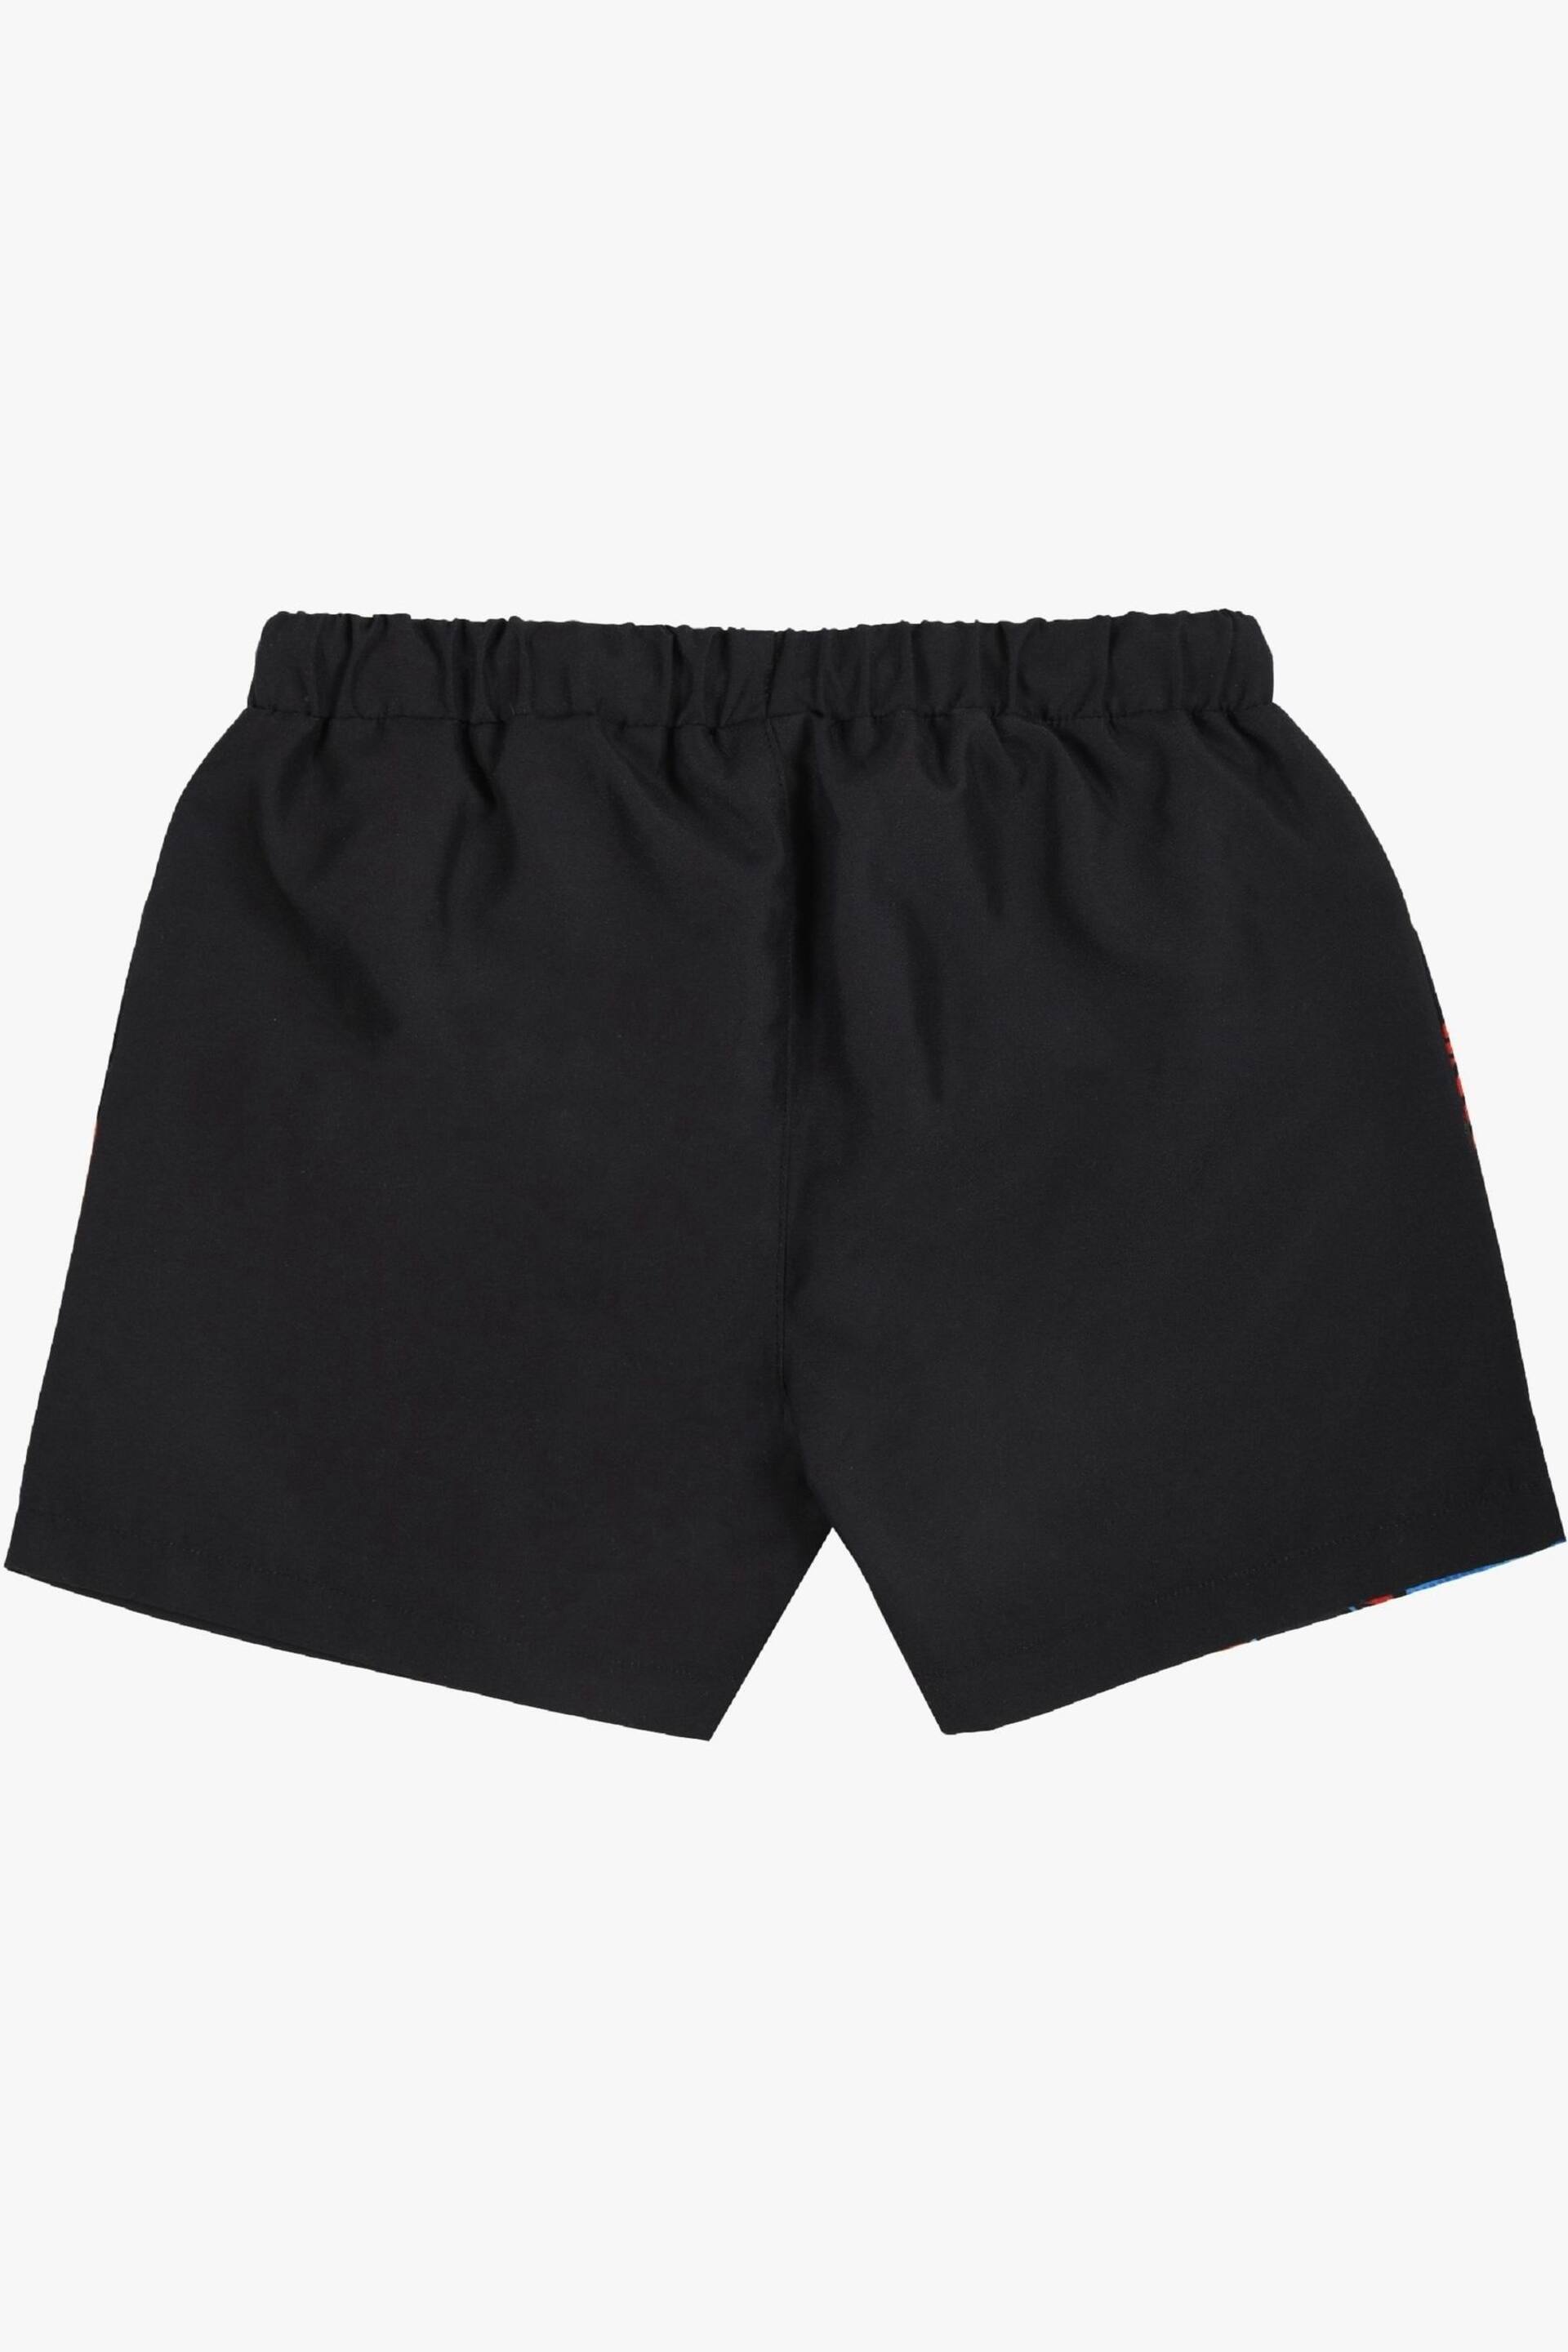 Brand Threads Black Spiderman Boys Swim Shorts - Image 2 of 4